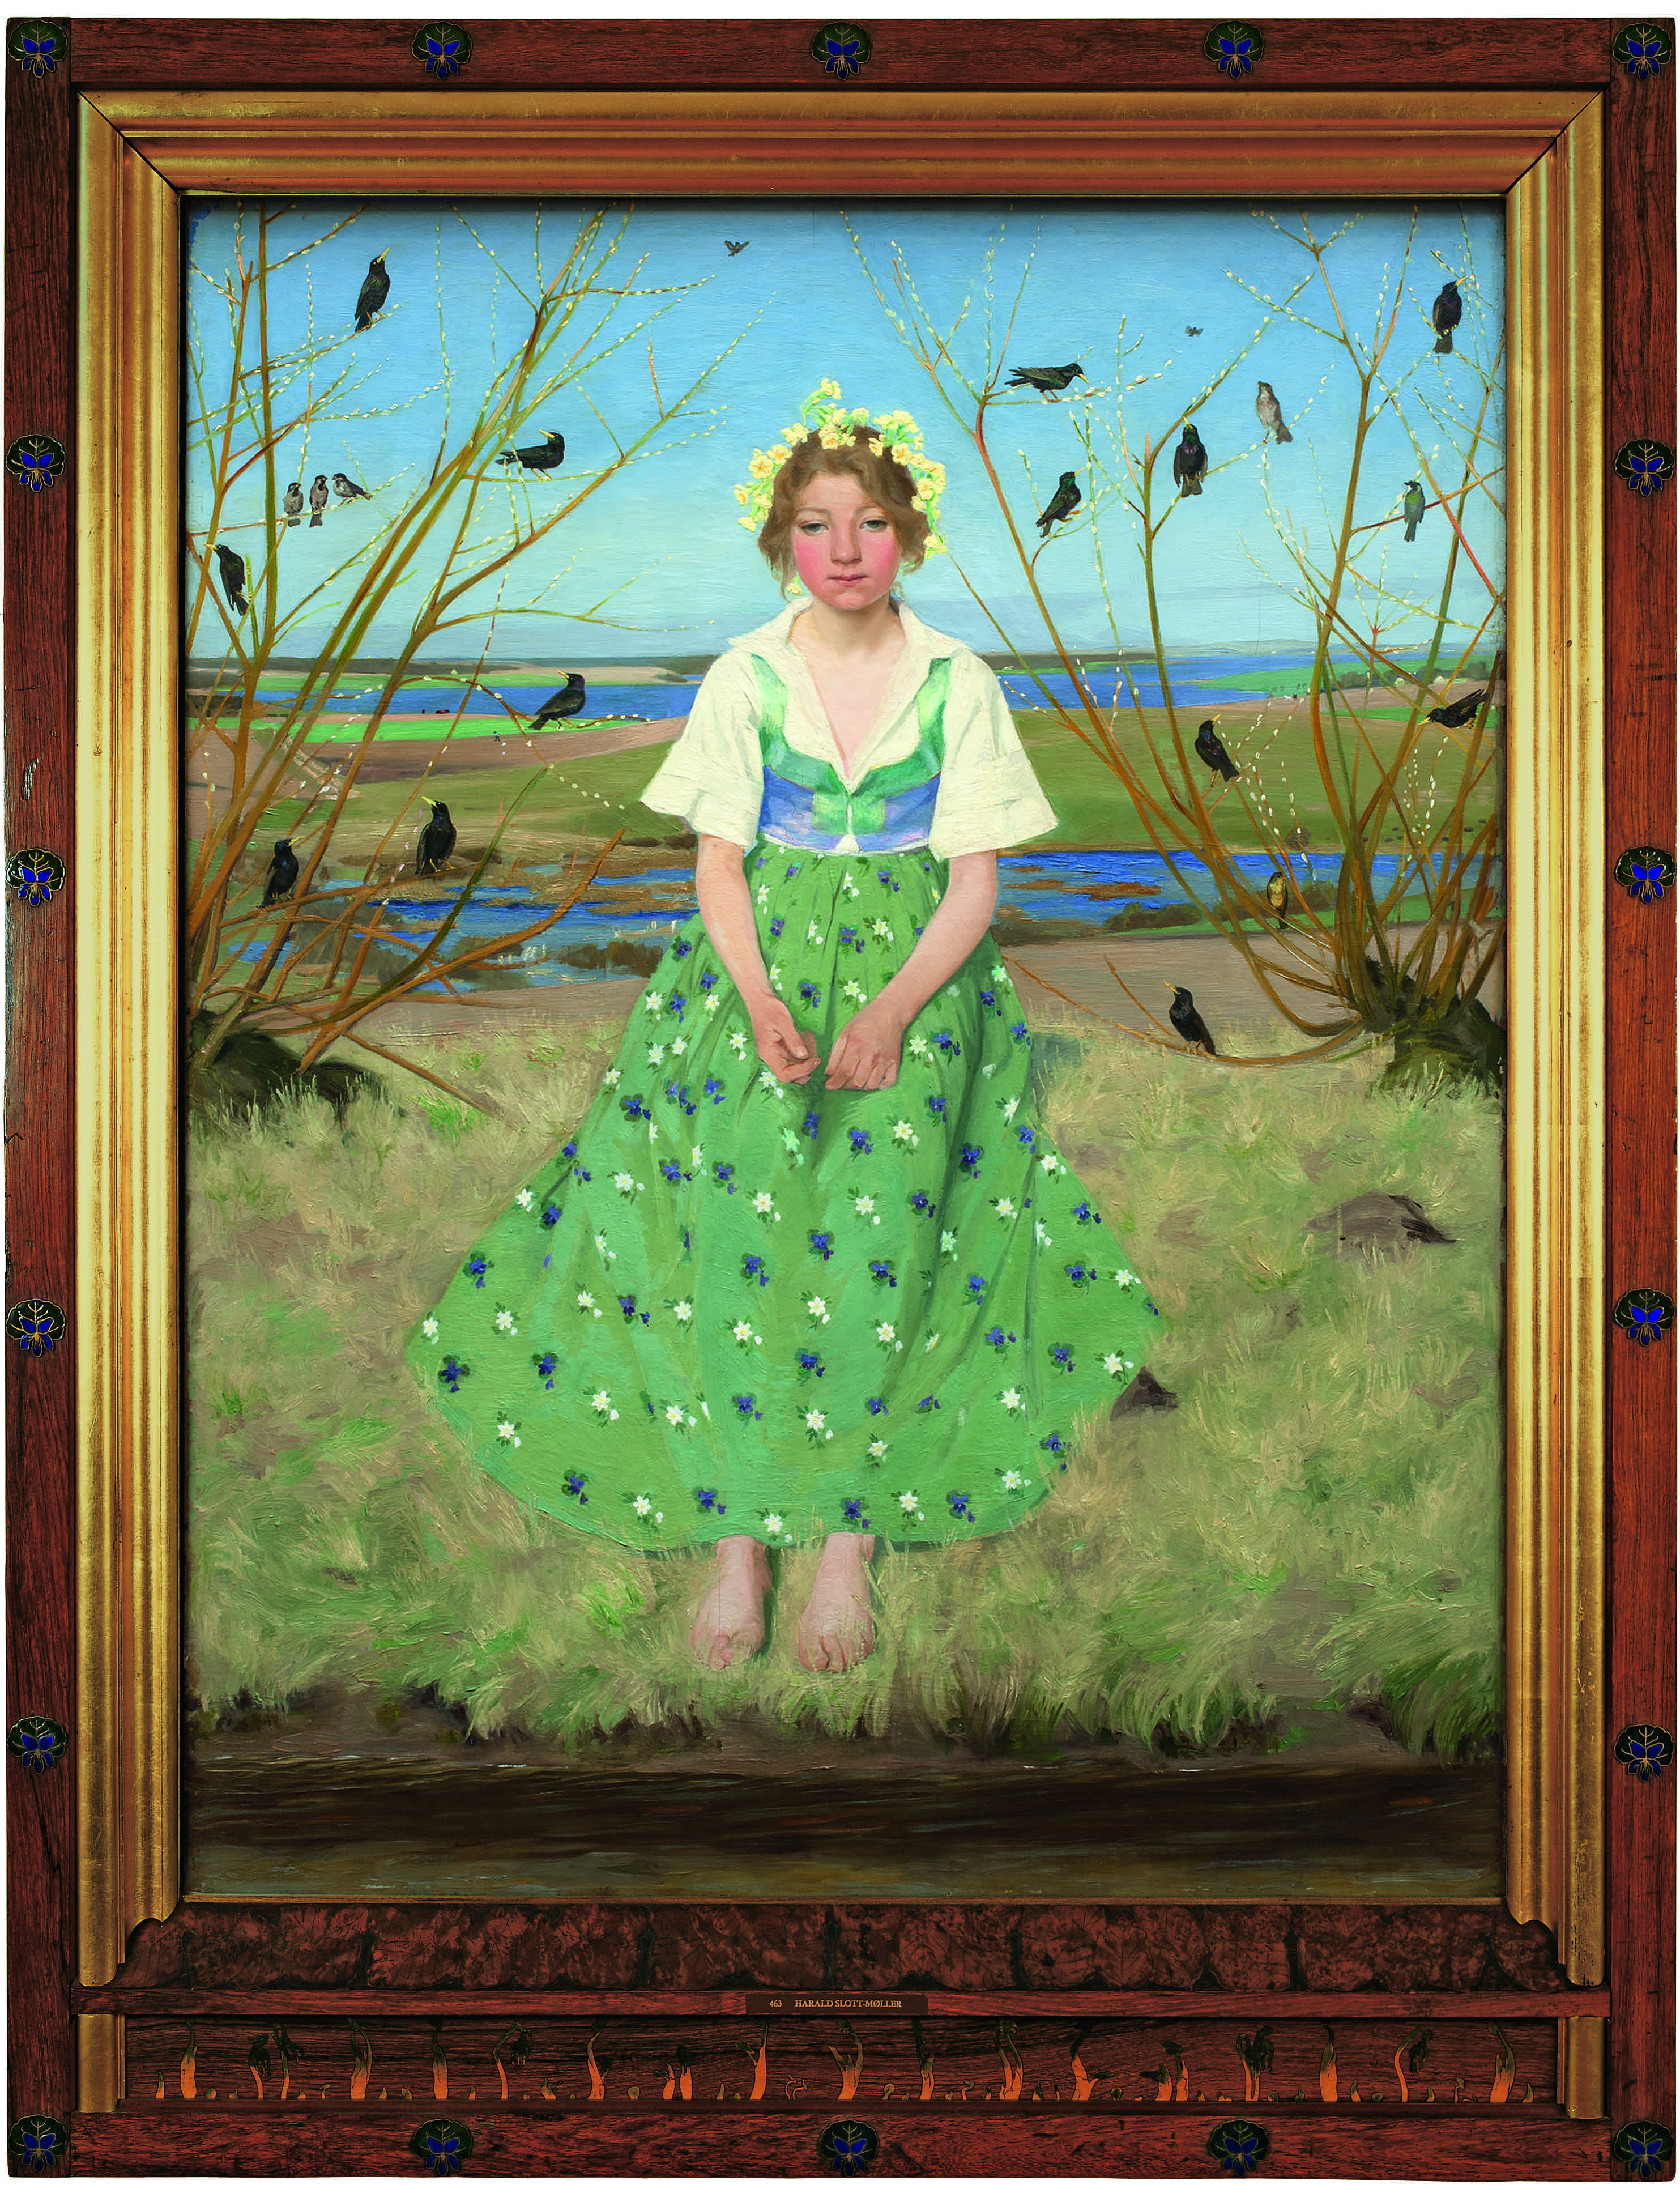 Primavera by Harald Slott-Møller - 1896 - 120 x 93 cm Colección Hirschsprung